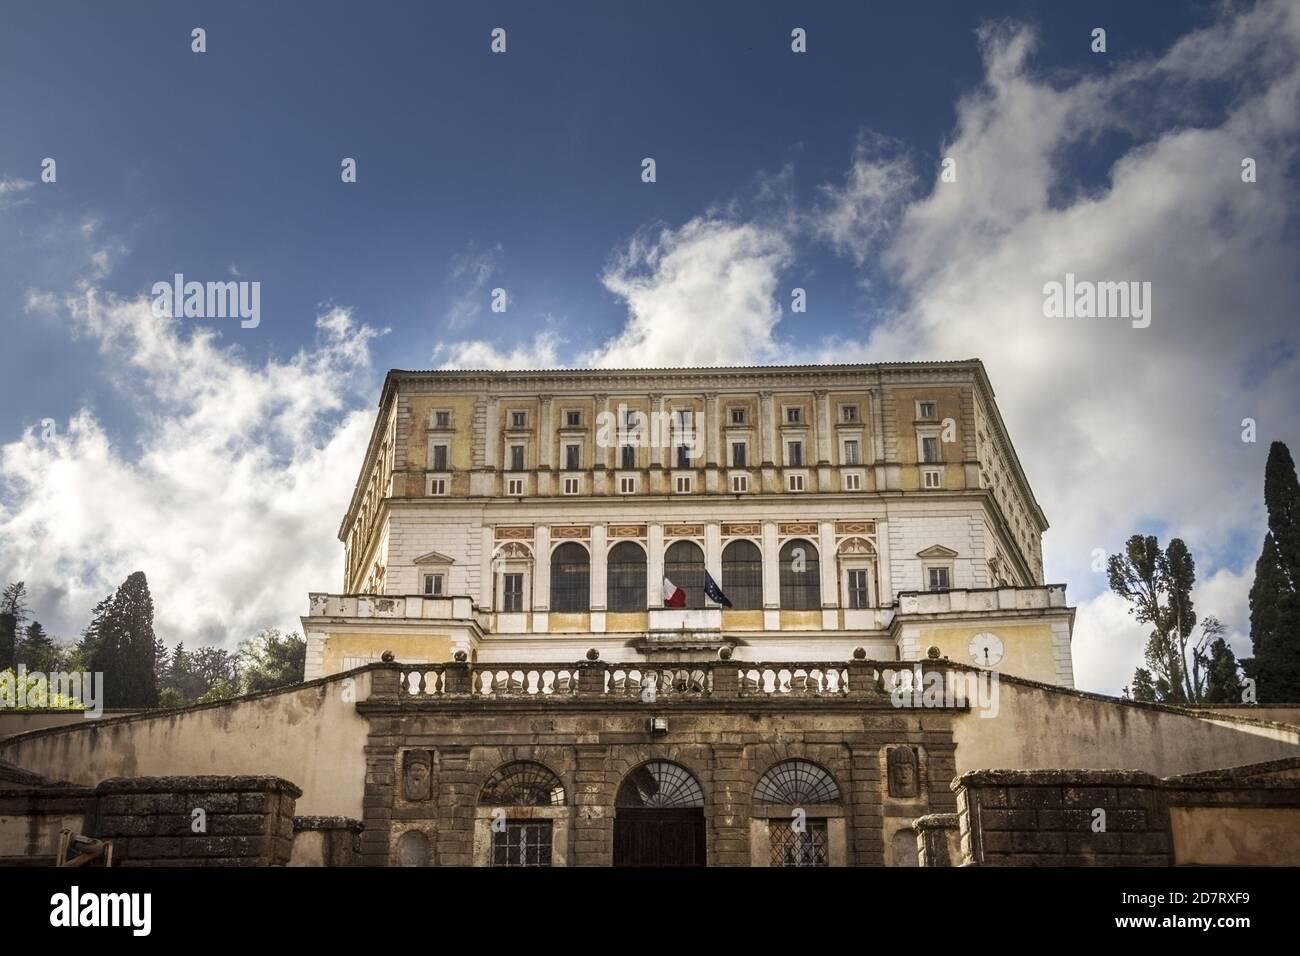 Villa Farnese dans la ville de Caprarola, Viterbo, Italie Banque D'Images